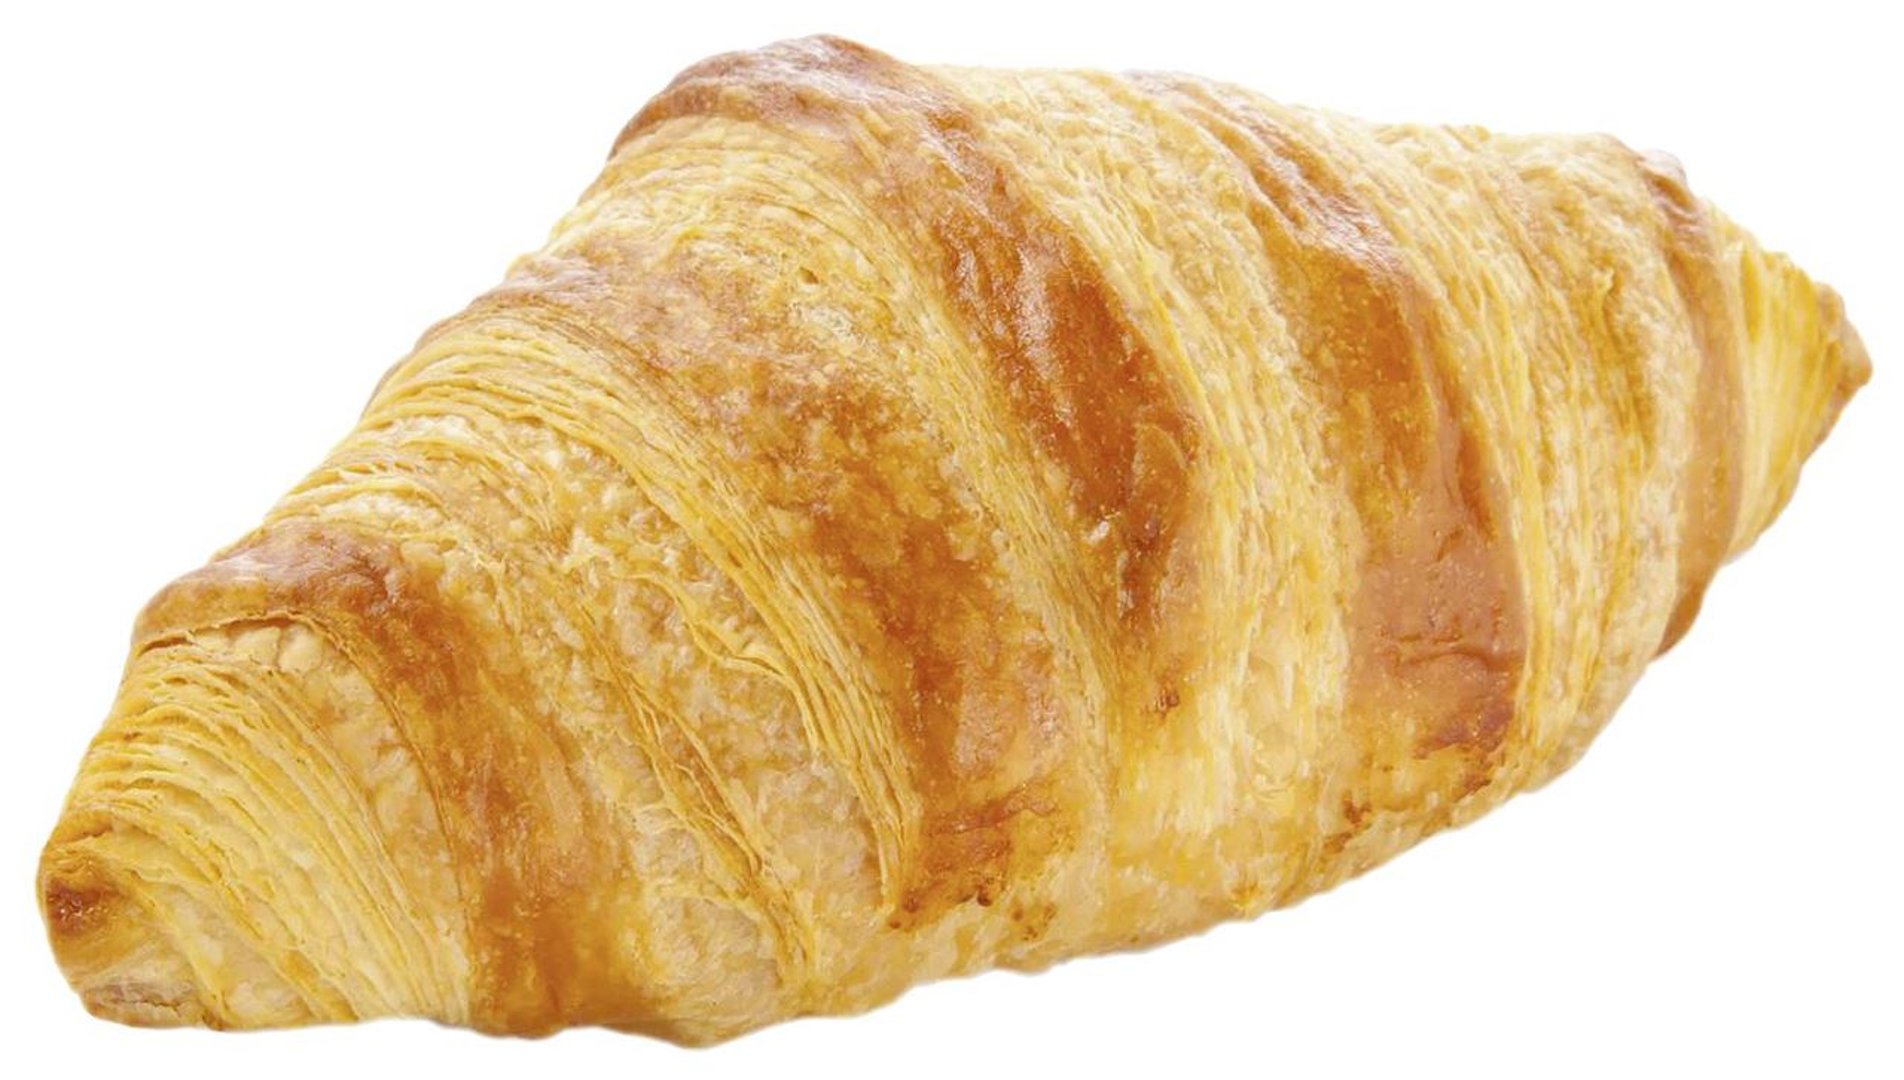 Edna - Mini Croissant Bake up tiefgefroren, Teigling 200 Stück à 25 g - 5 kg Karton